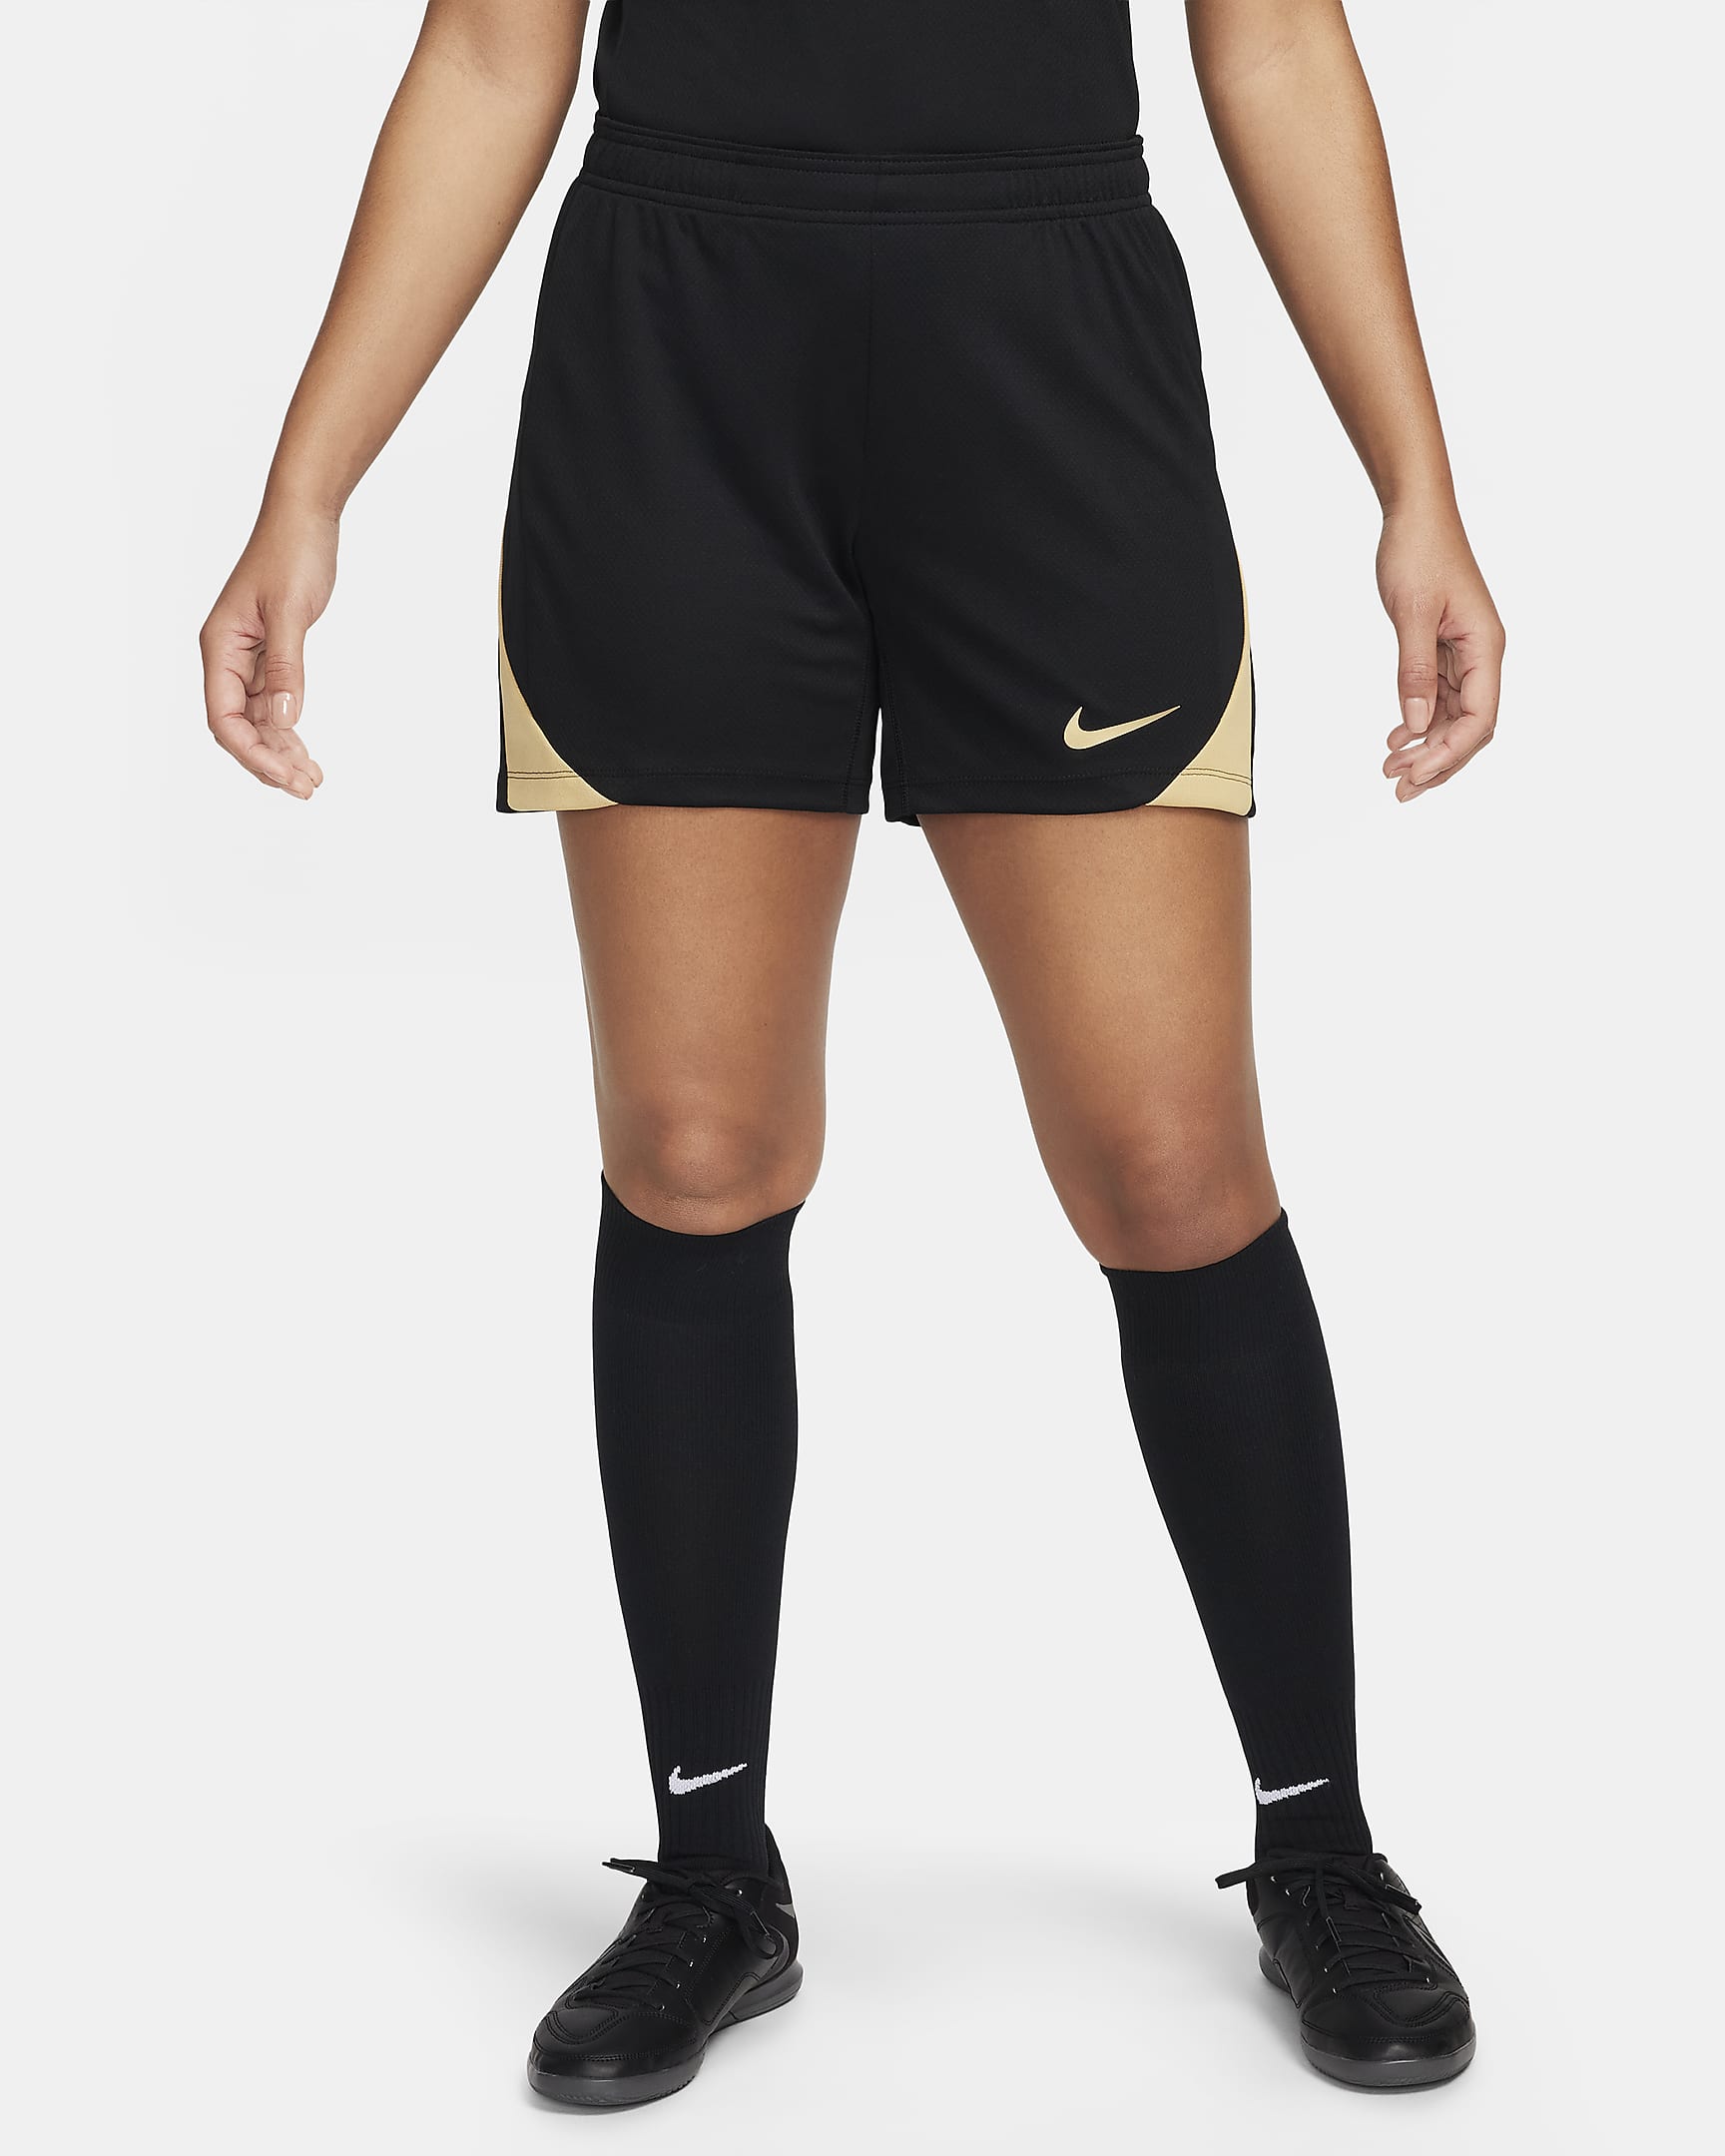 Nike Strike Dri-FIT női futballrövidnadrág - Fekete/Jersey Gold/Metallic Gold